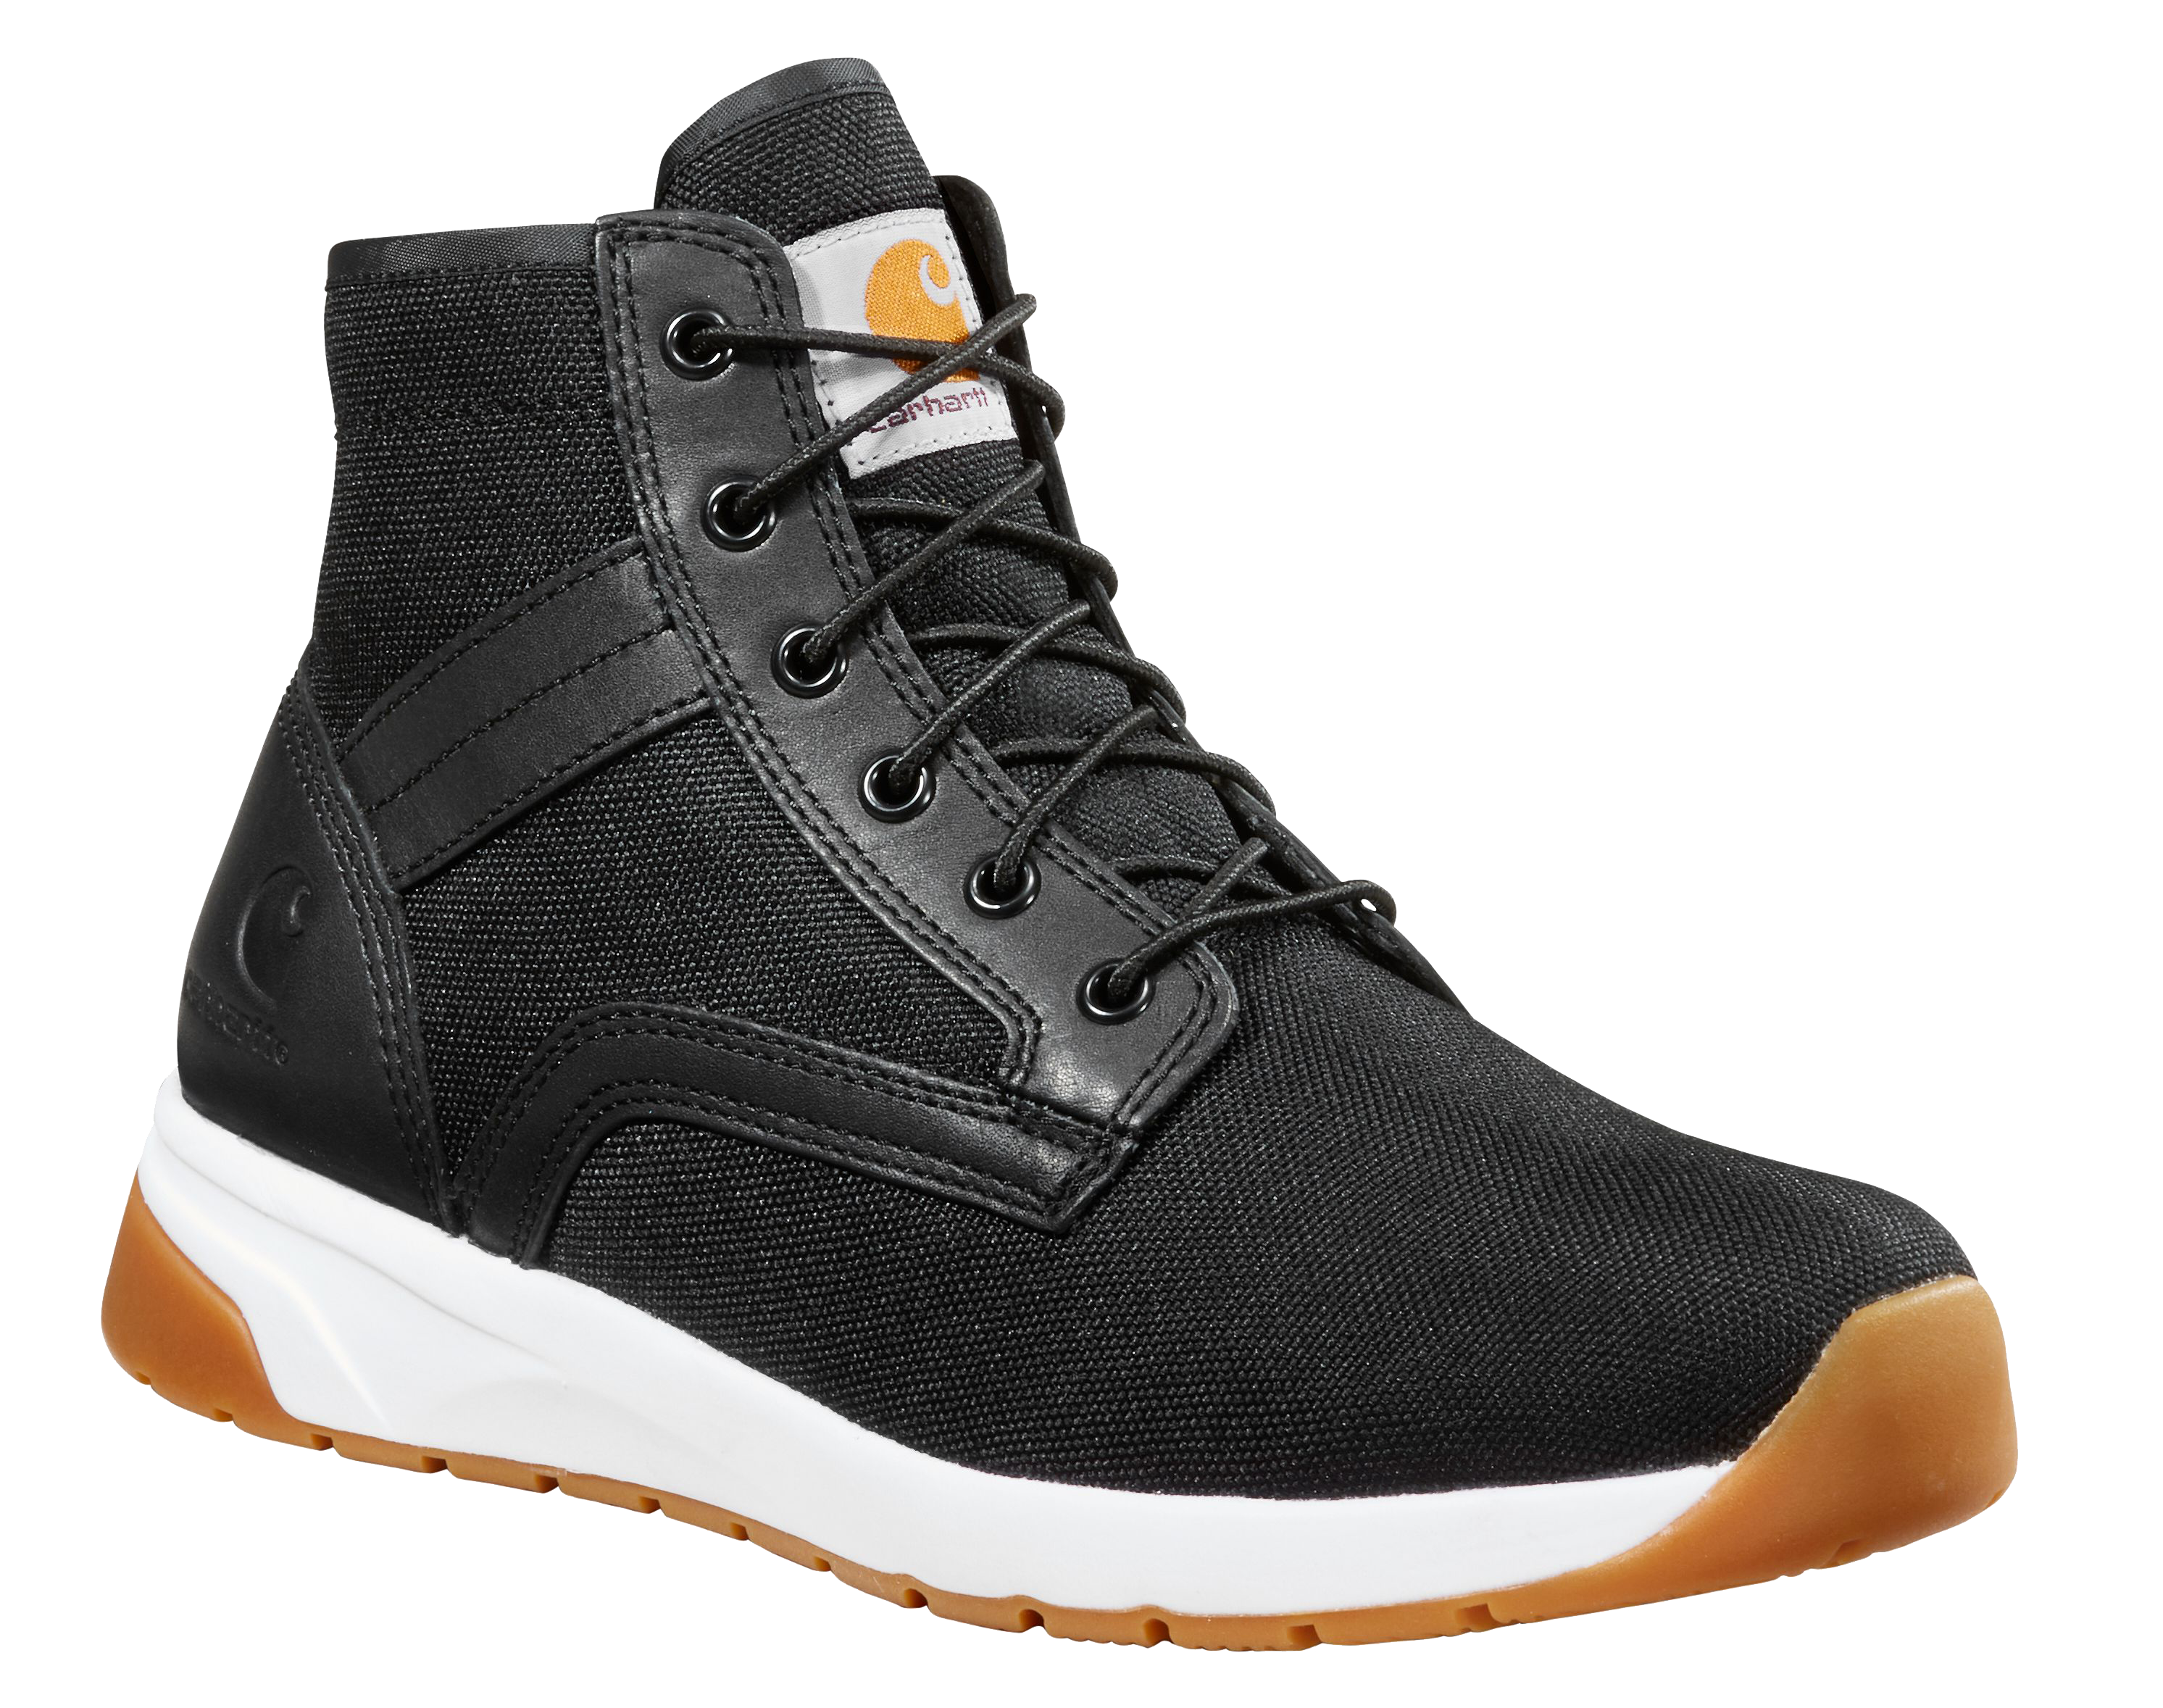 Carhartt Force Composite Toe Sneaker Boots for Men